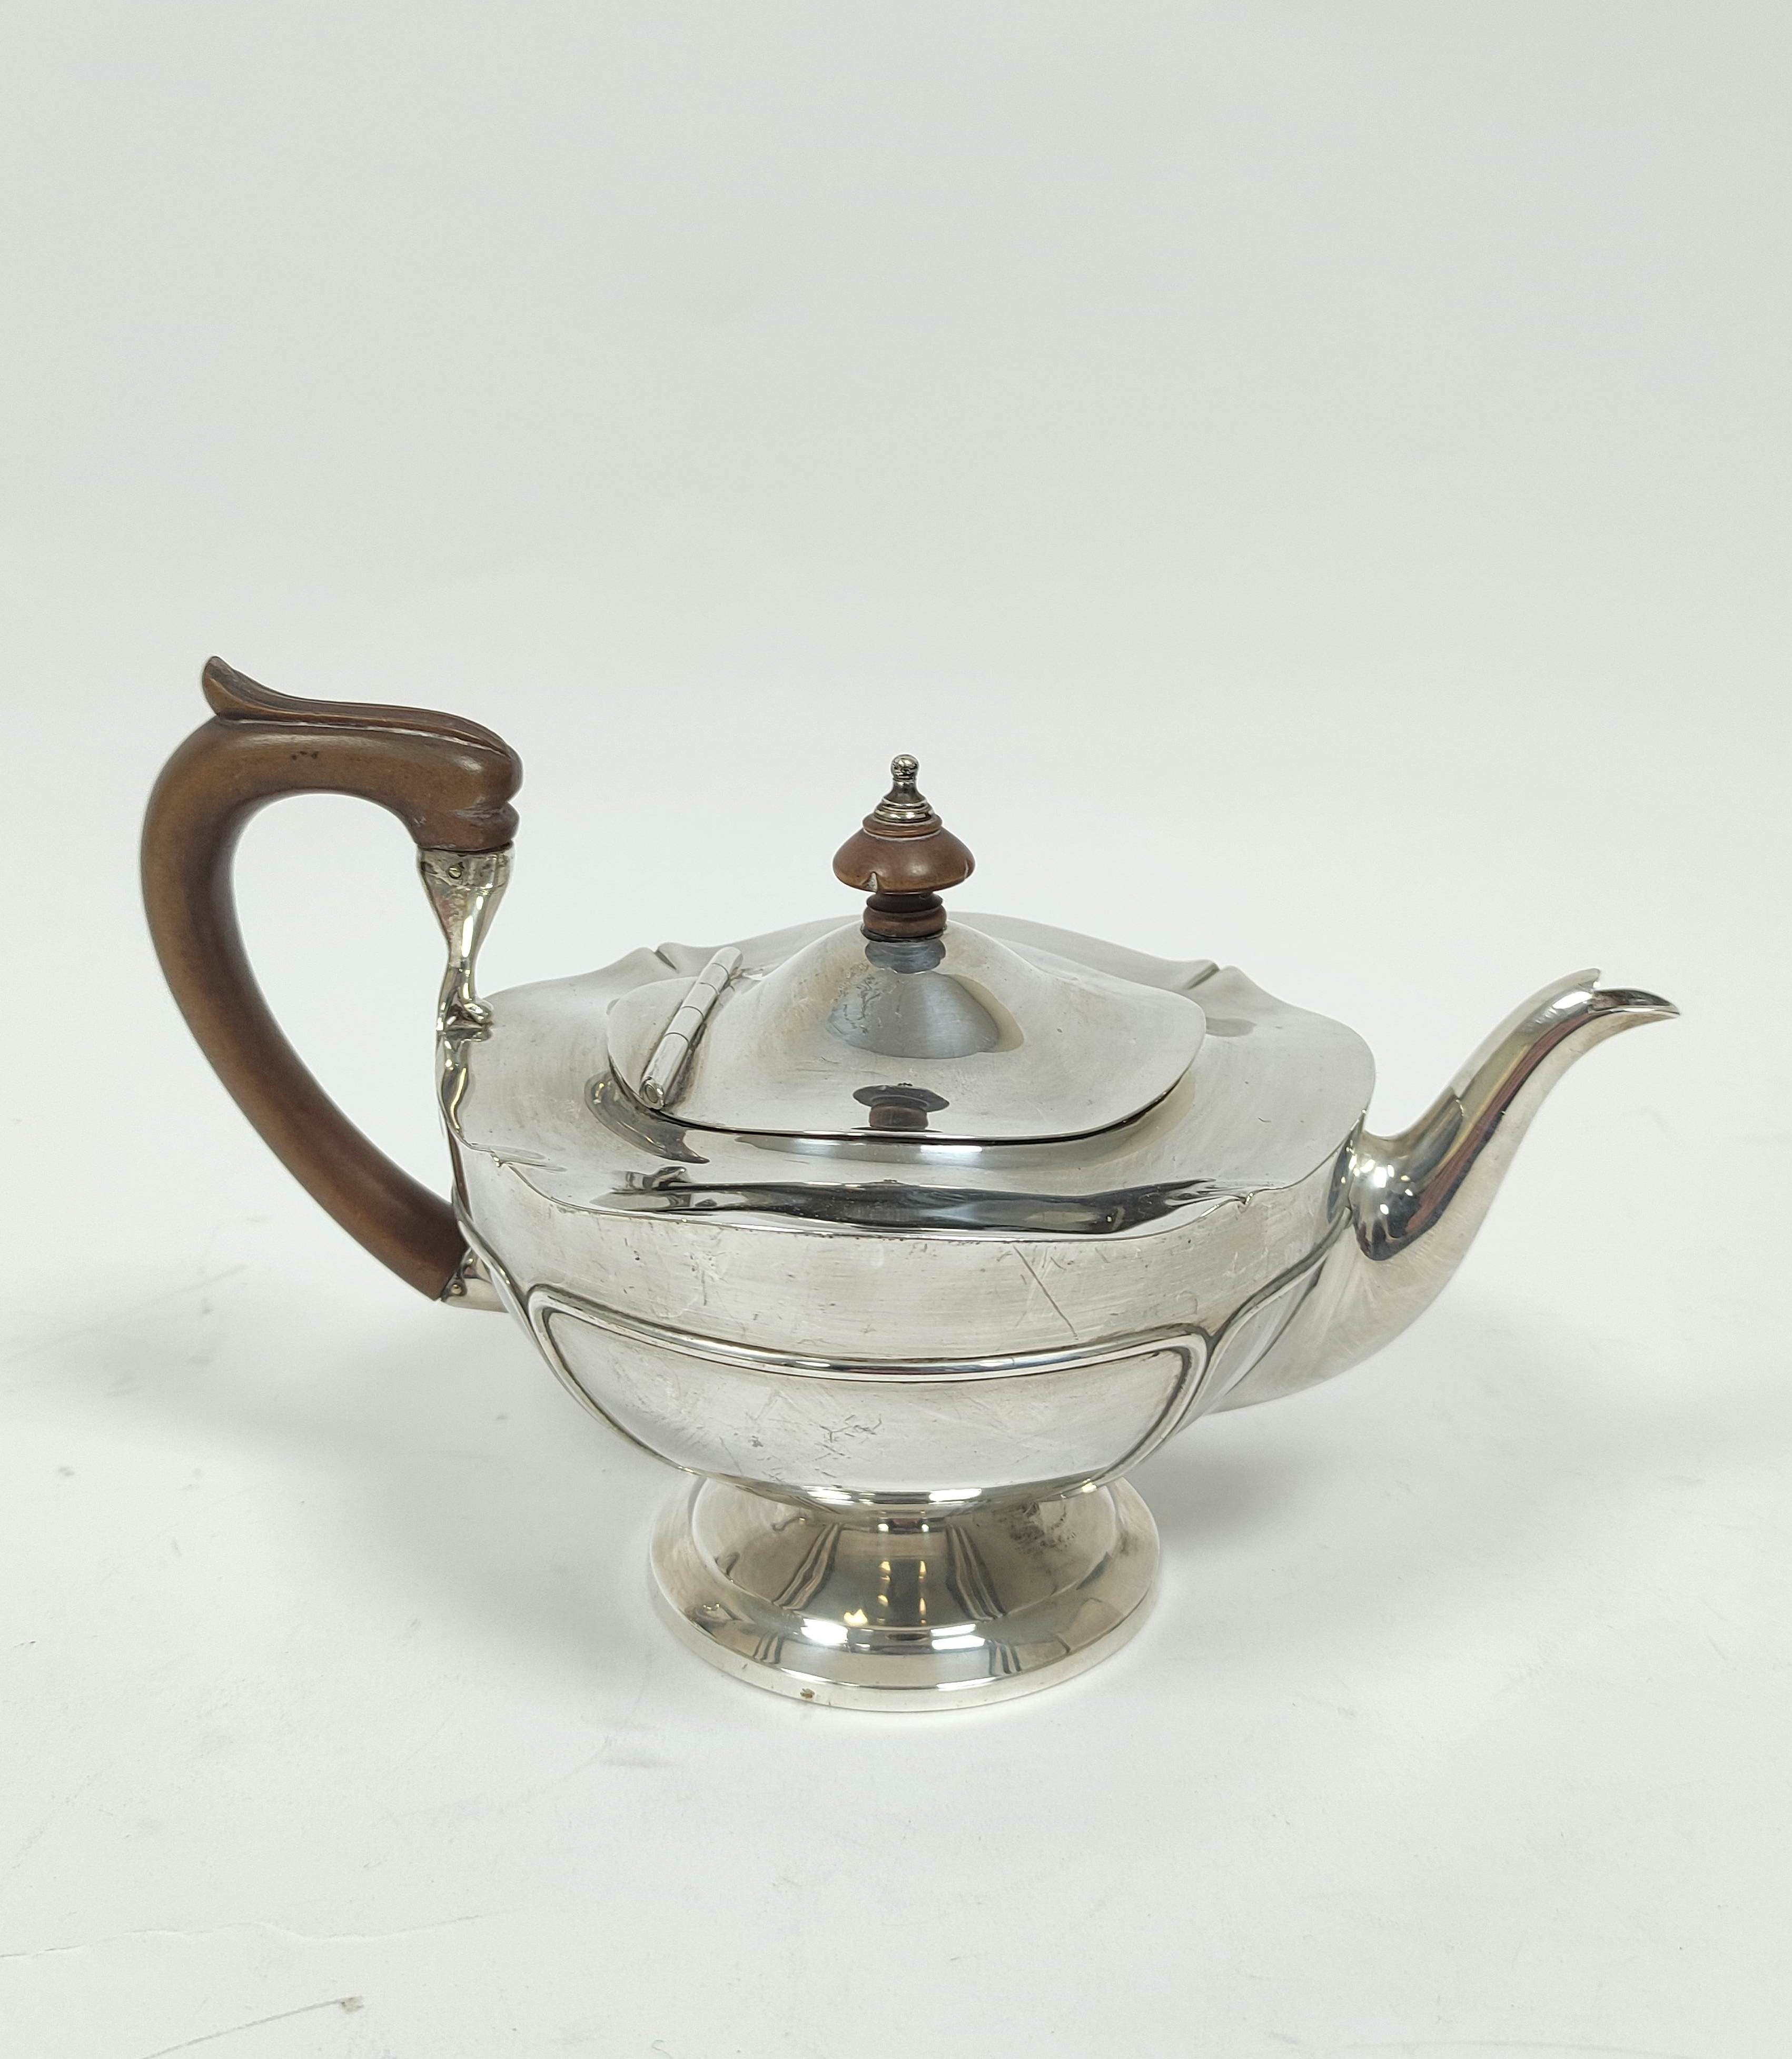 Silver tea pot, hemispherical with waved edges, by Reids, Newcastle (London) 1910, 580g / 17oz. - Image 2 of 6